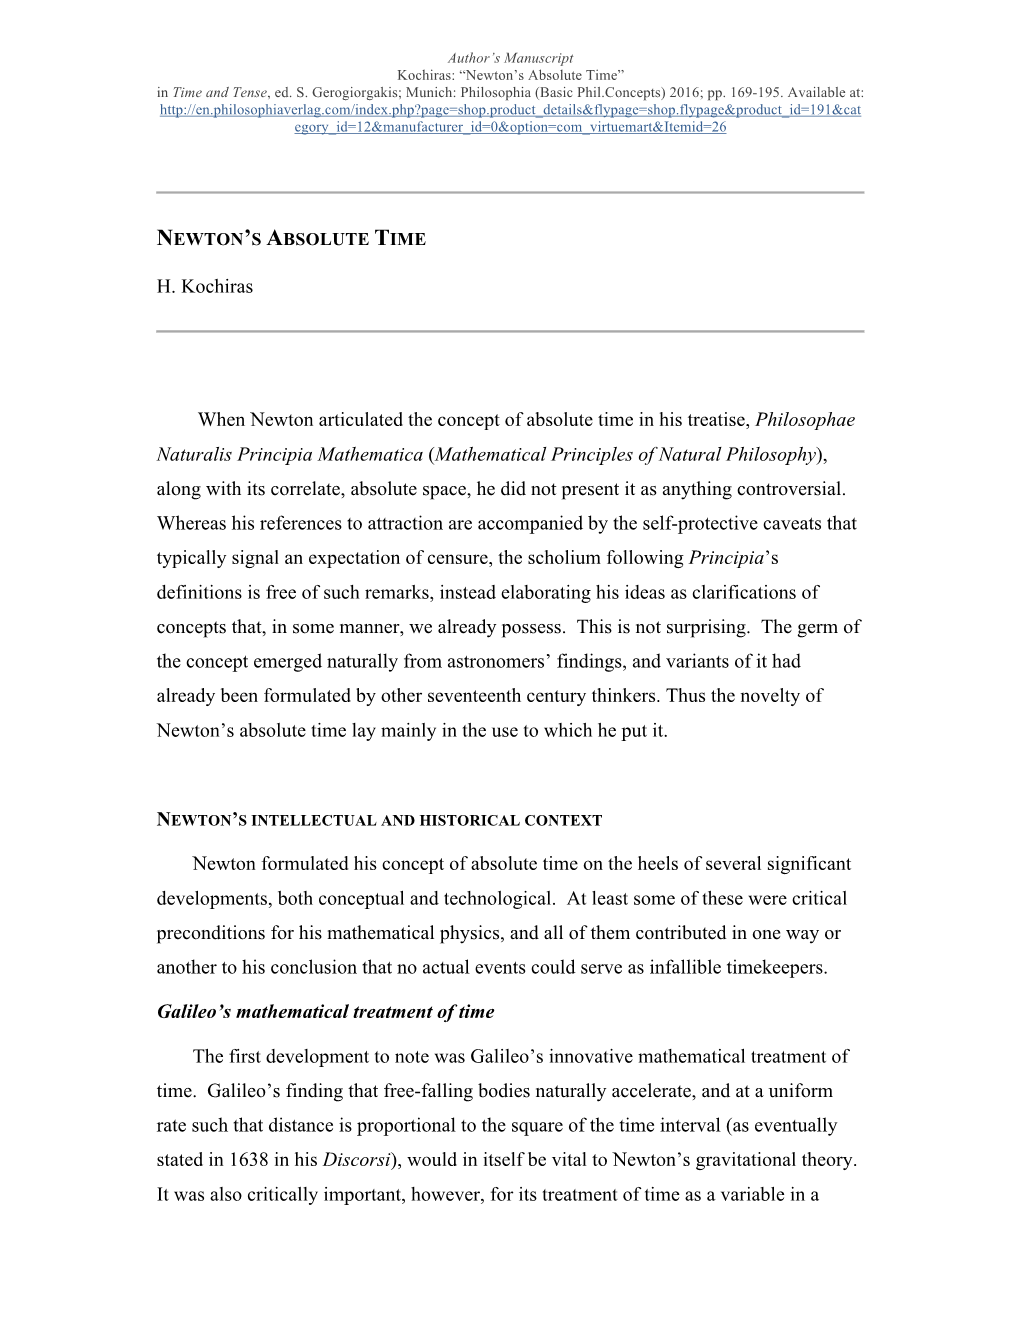 Kochiras.Newton's Absolute Time (In Time & Tense)-Author'smanuscript2